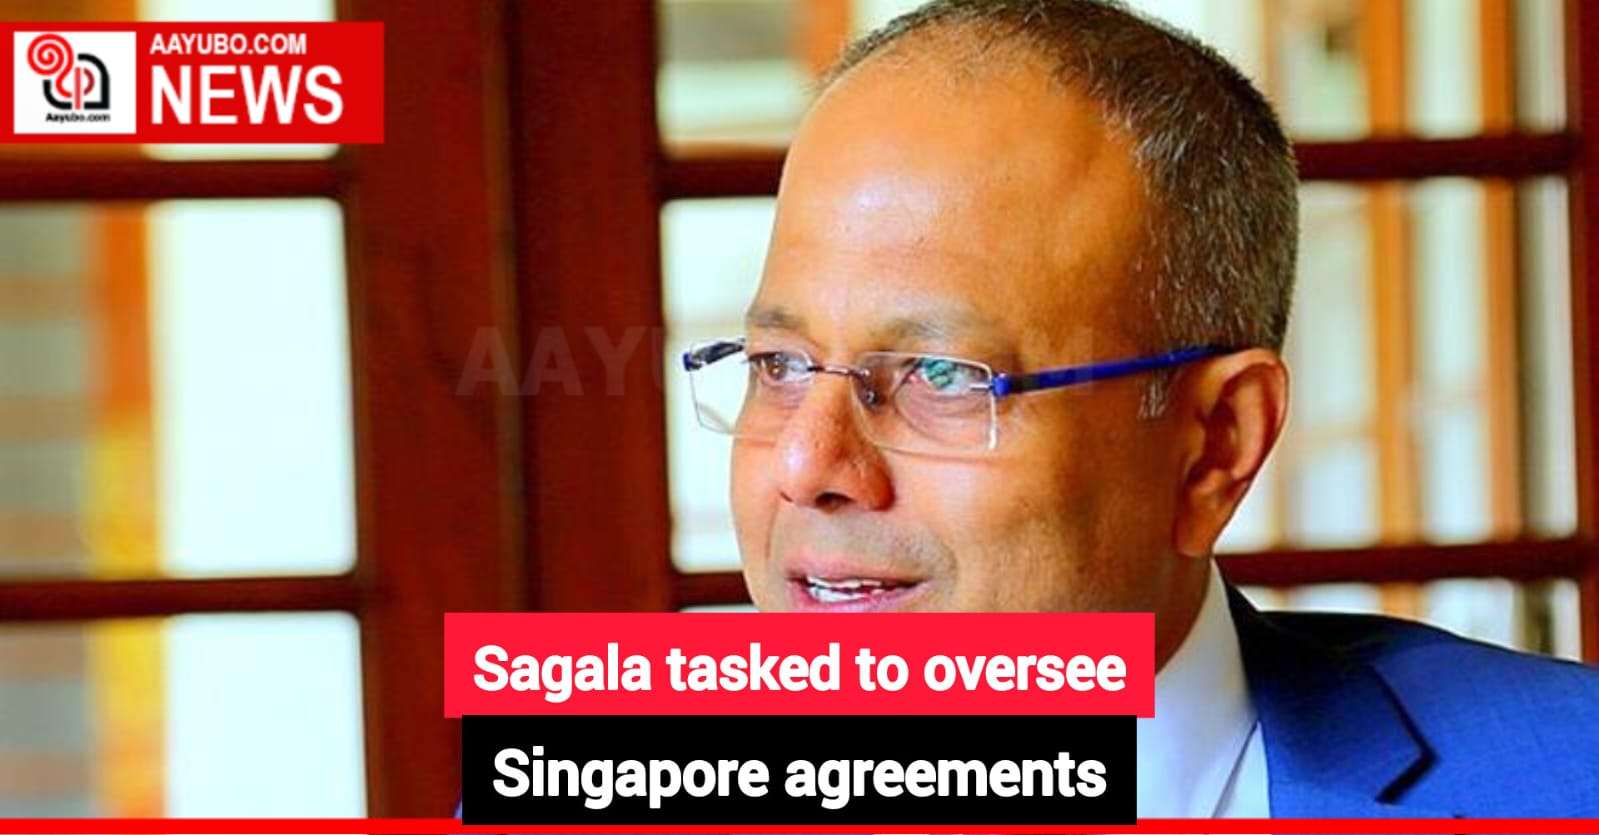 Sagala tasked to oversee Singapore agreements